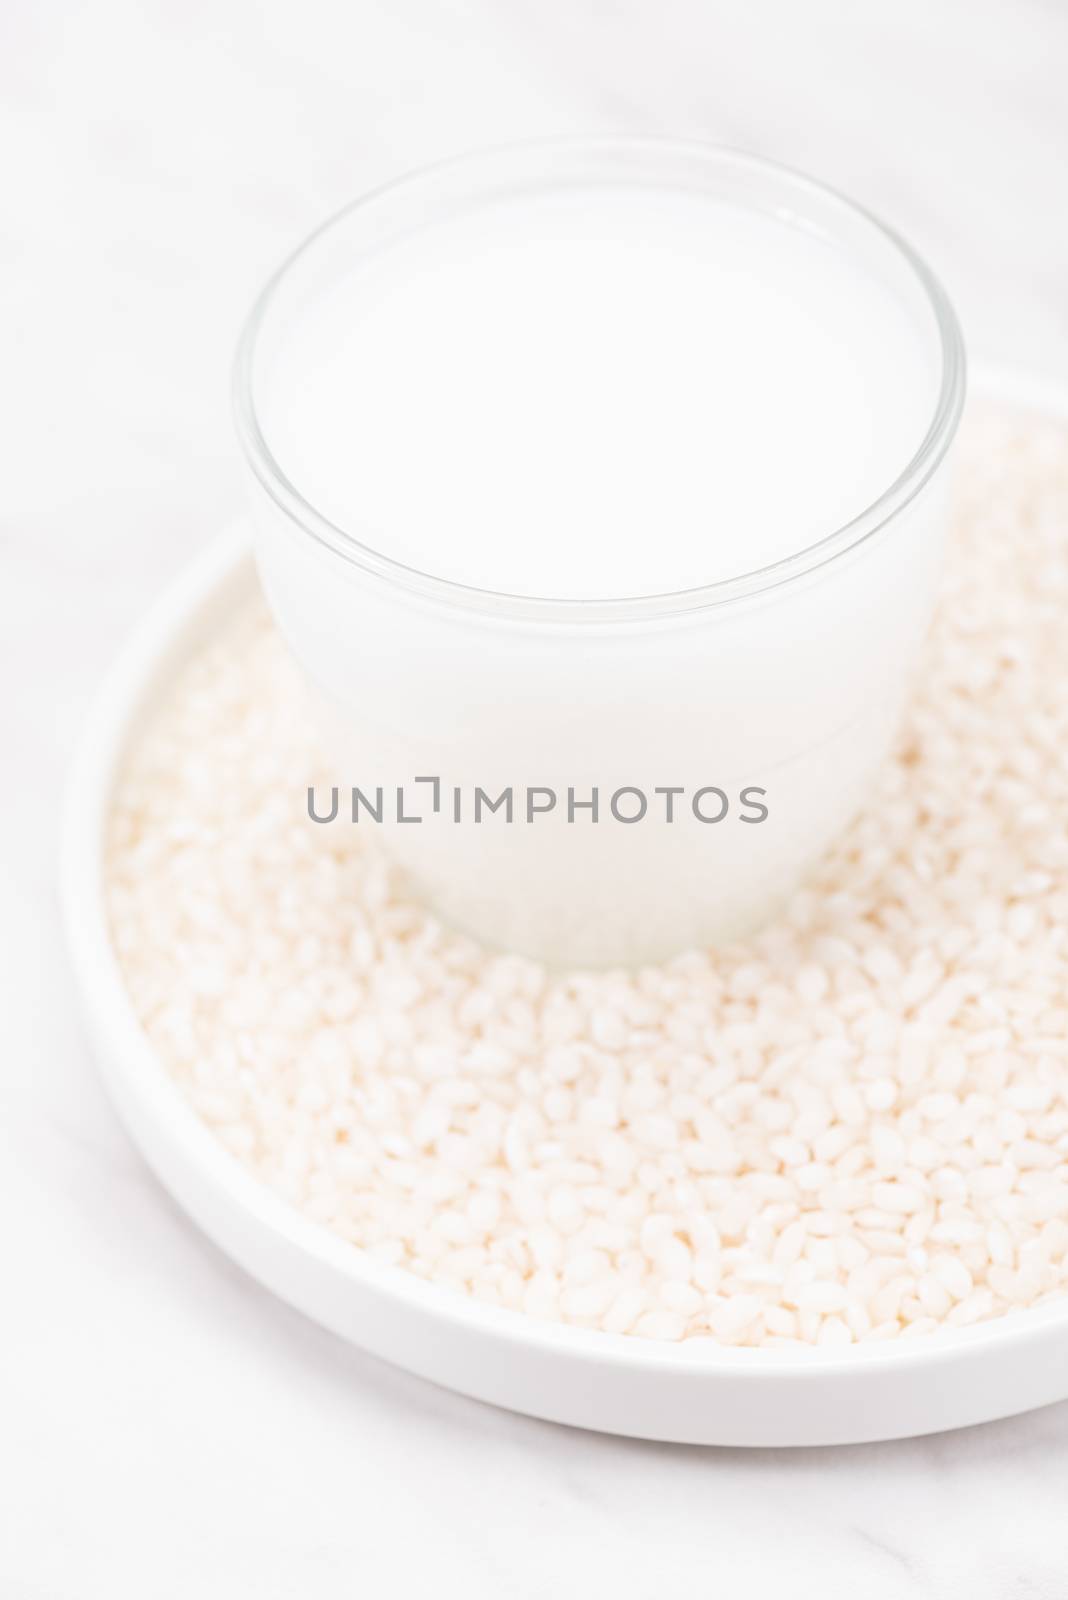 Rice Milk. Alternative Non Dairy Oraganic Milk. Plant Based Food by merc67